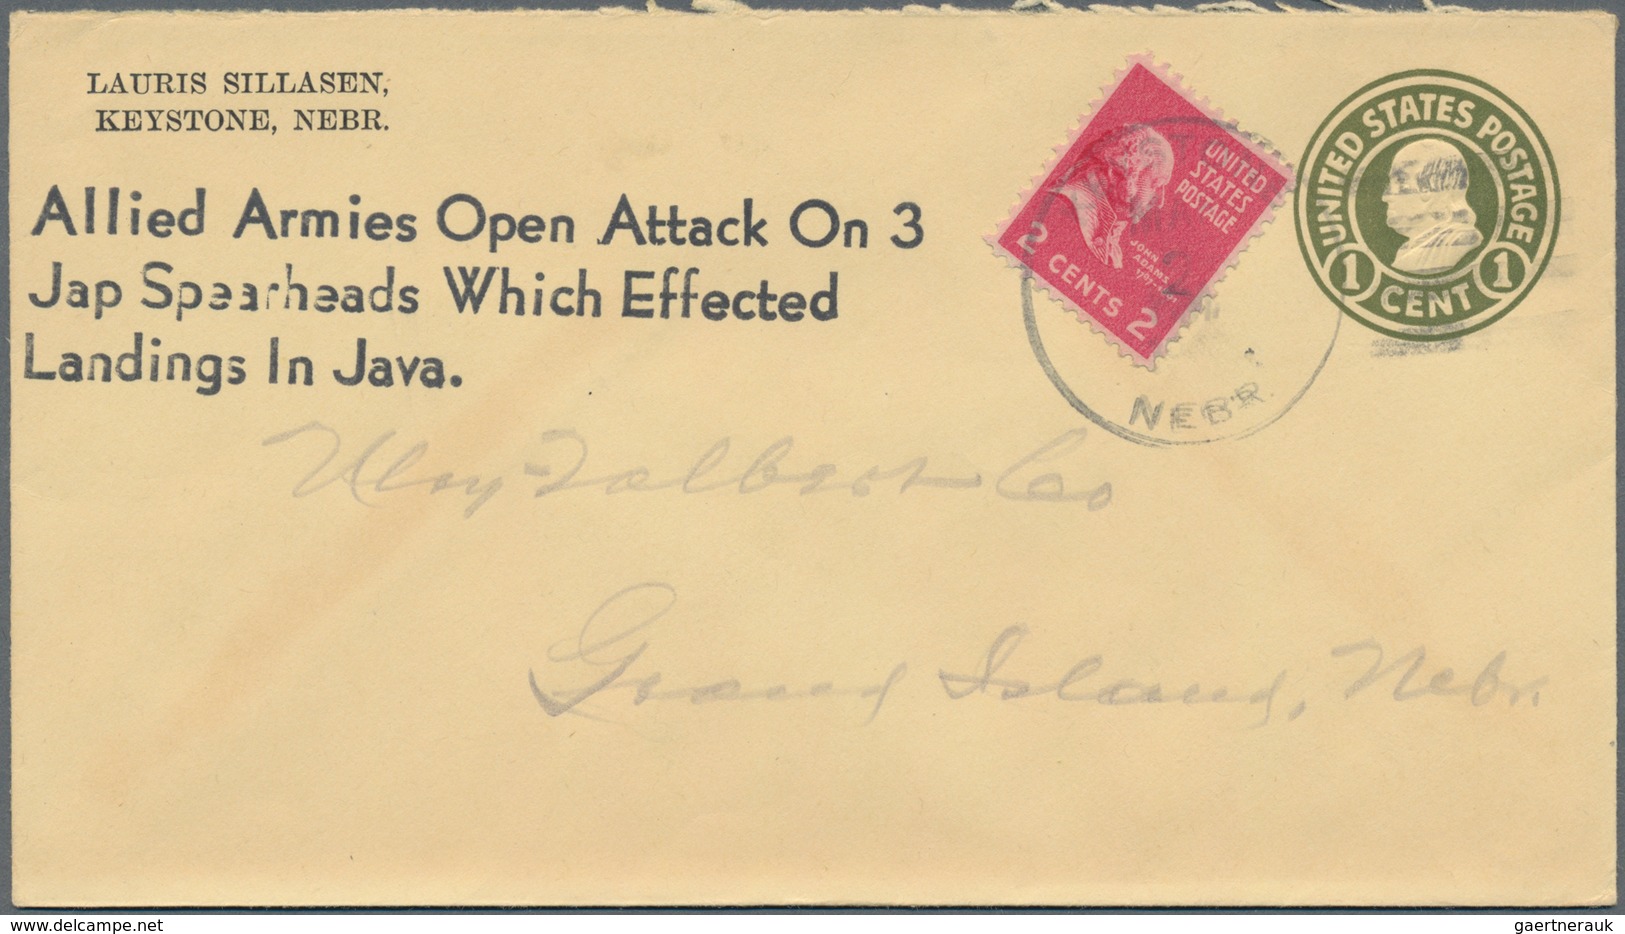 Vereinigte Staaten Von Amerika - Stempel: 1942 Used Postal Stationery Envelope 1 Cent Green On Yello - Marcofilie